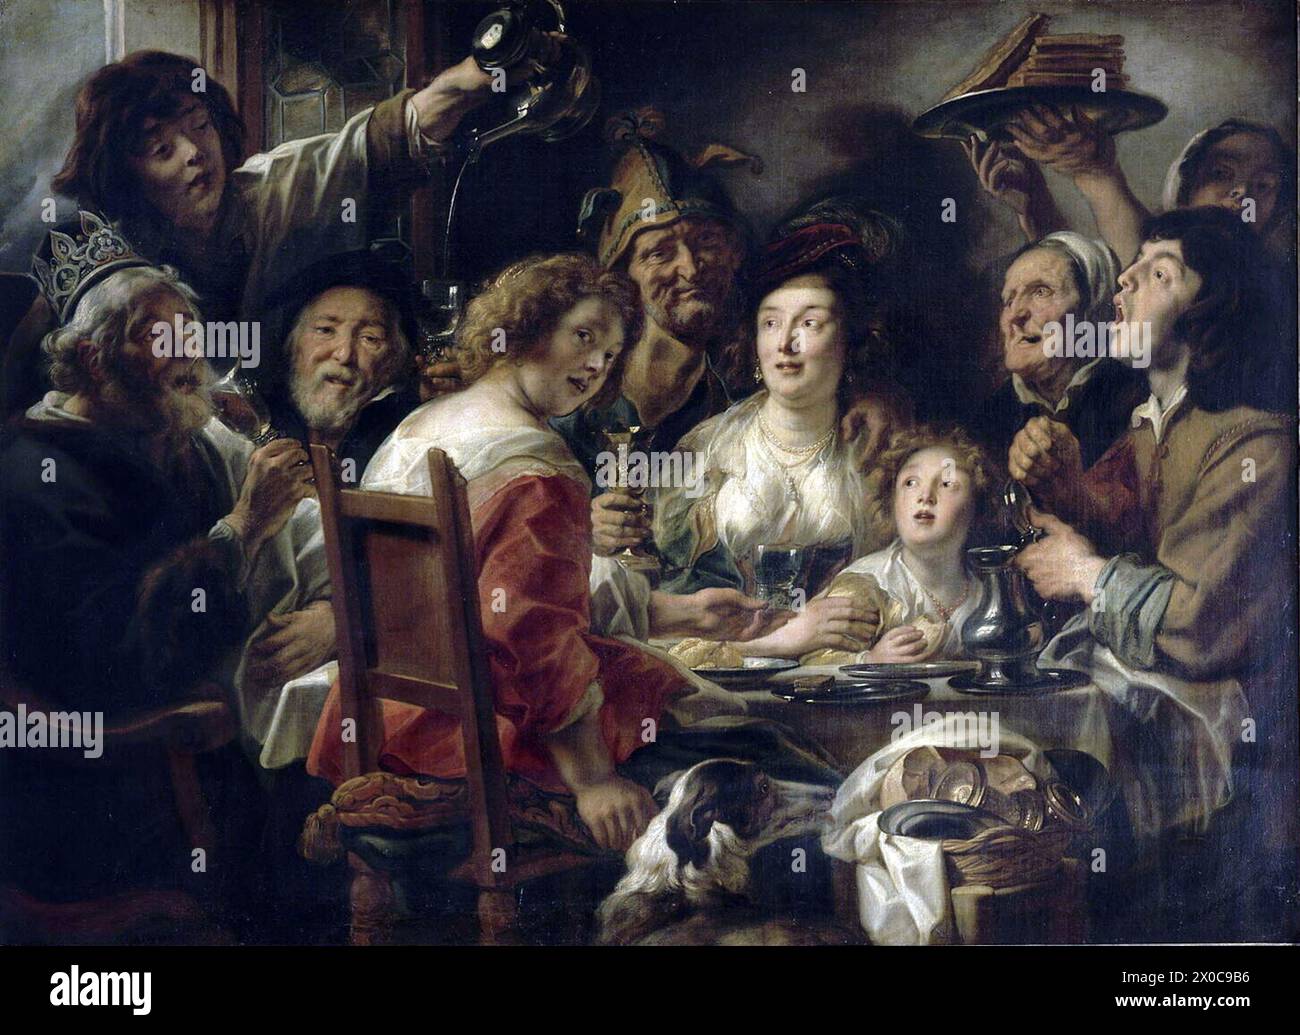 Jacob Jordaens - der König trinkt - Pariser Barockmalerei Stockfoto